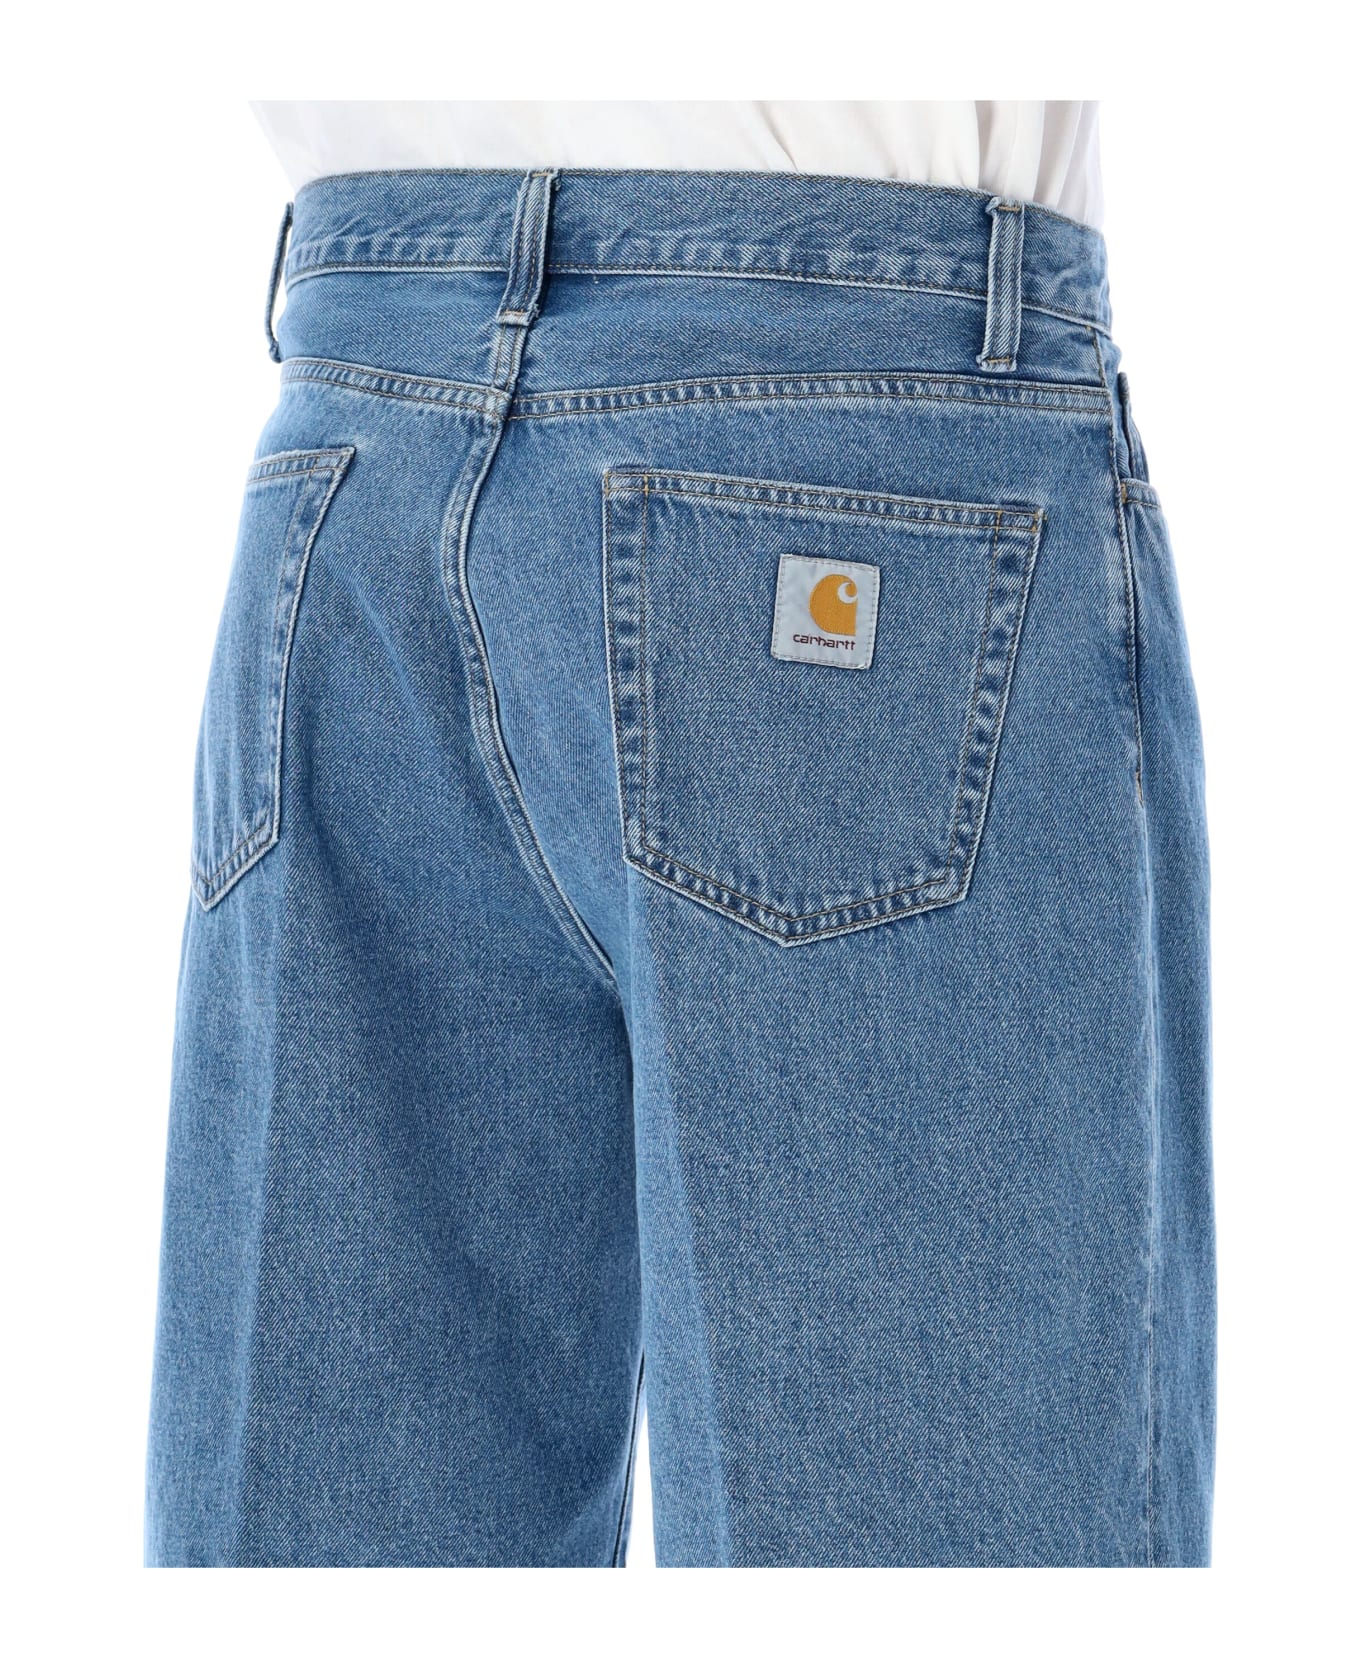 Carhartt Landon Shorts - BLUE HEAVY STONE WASH